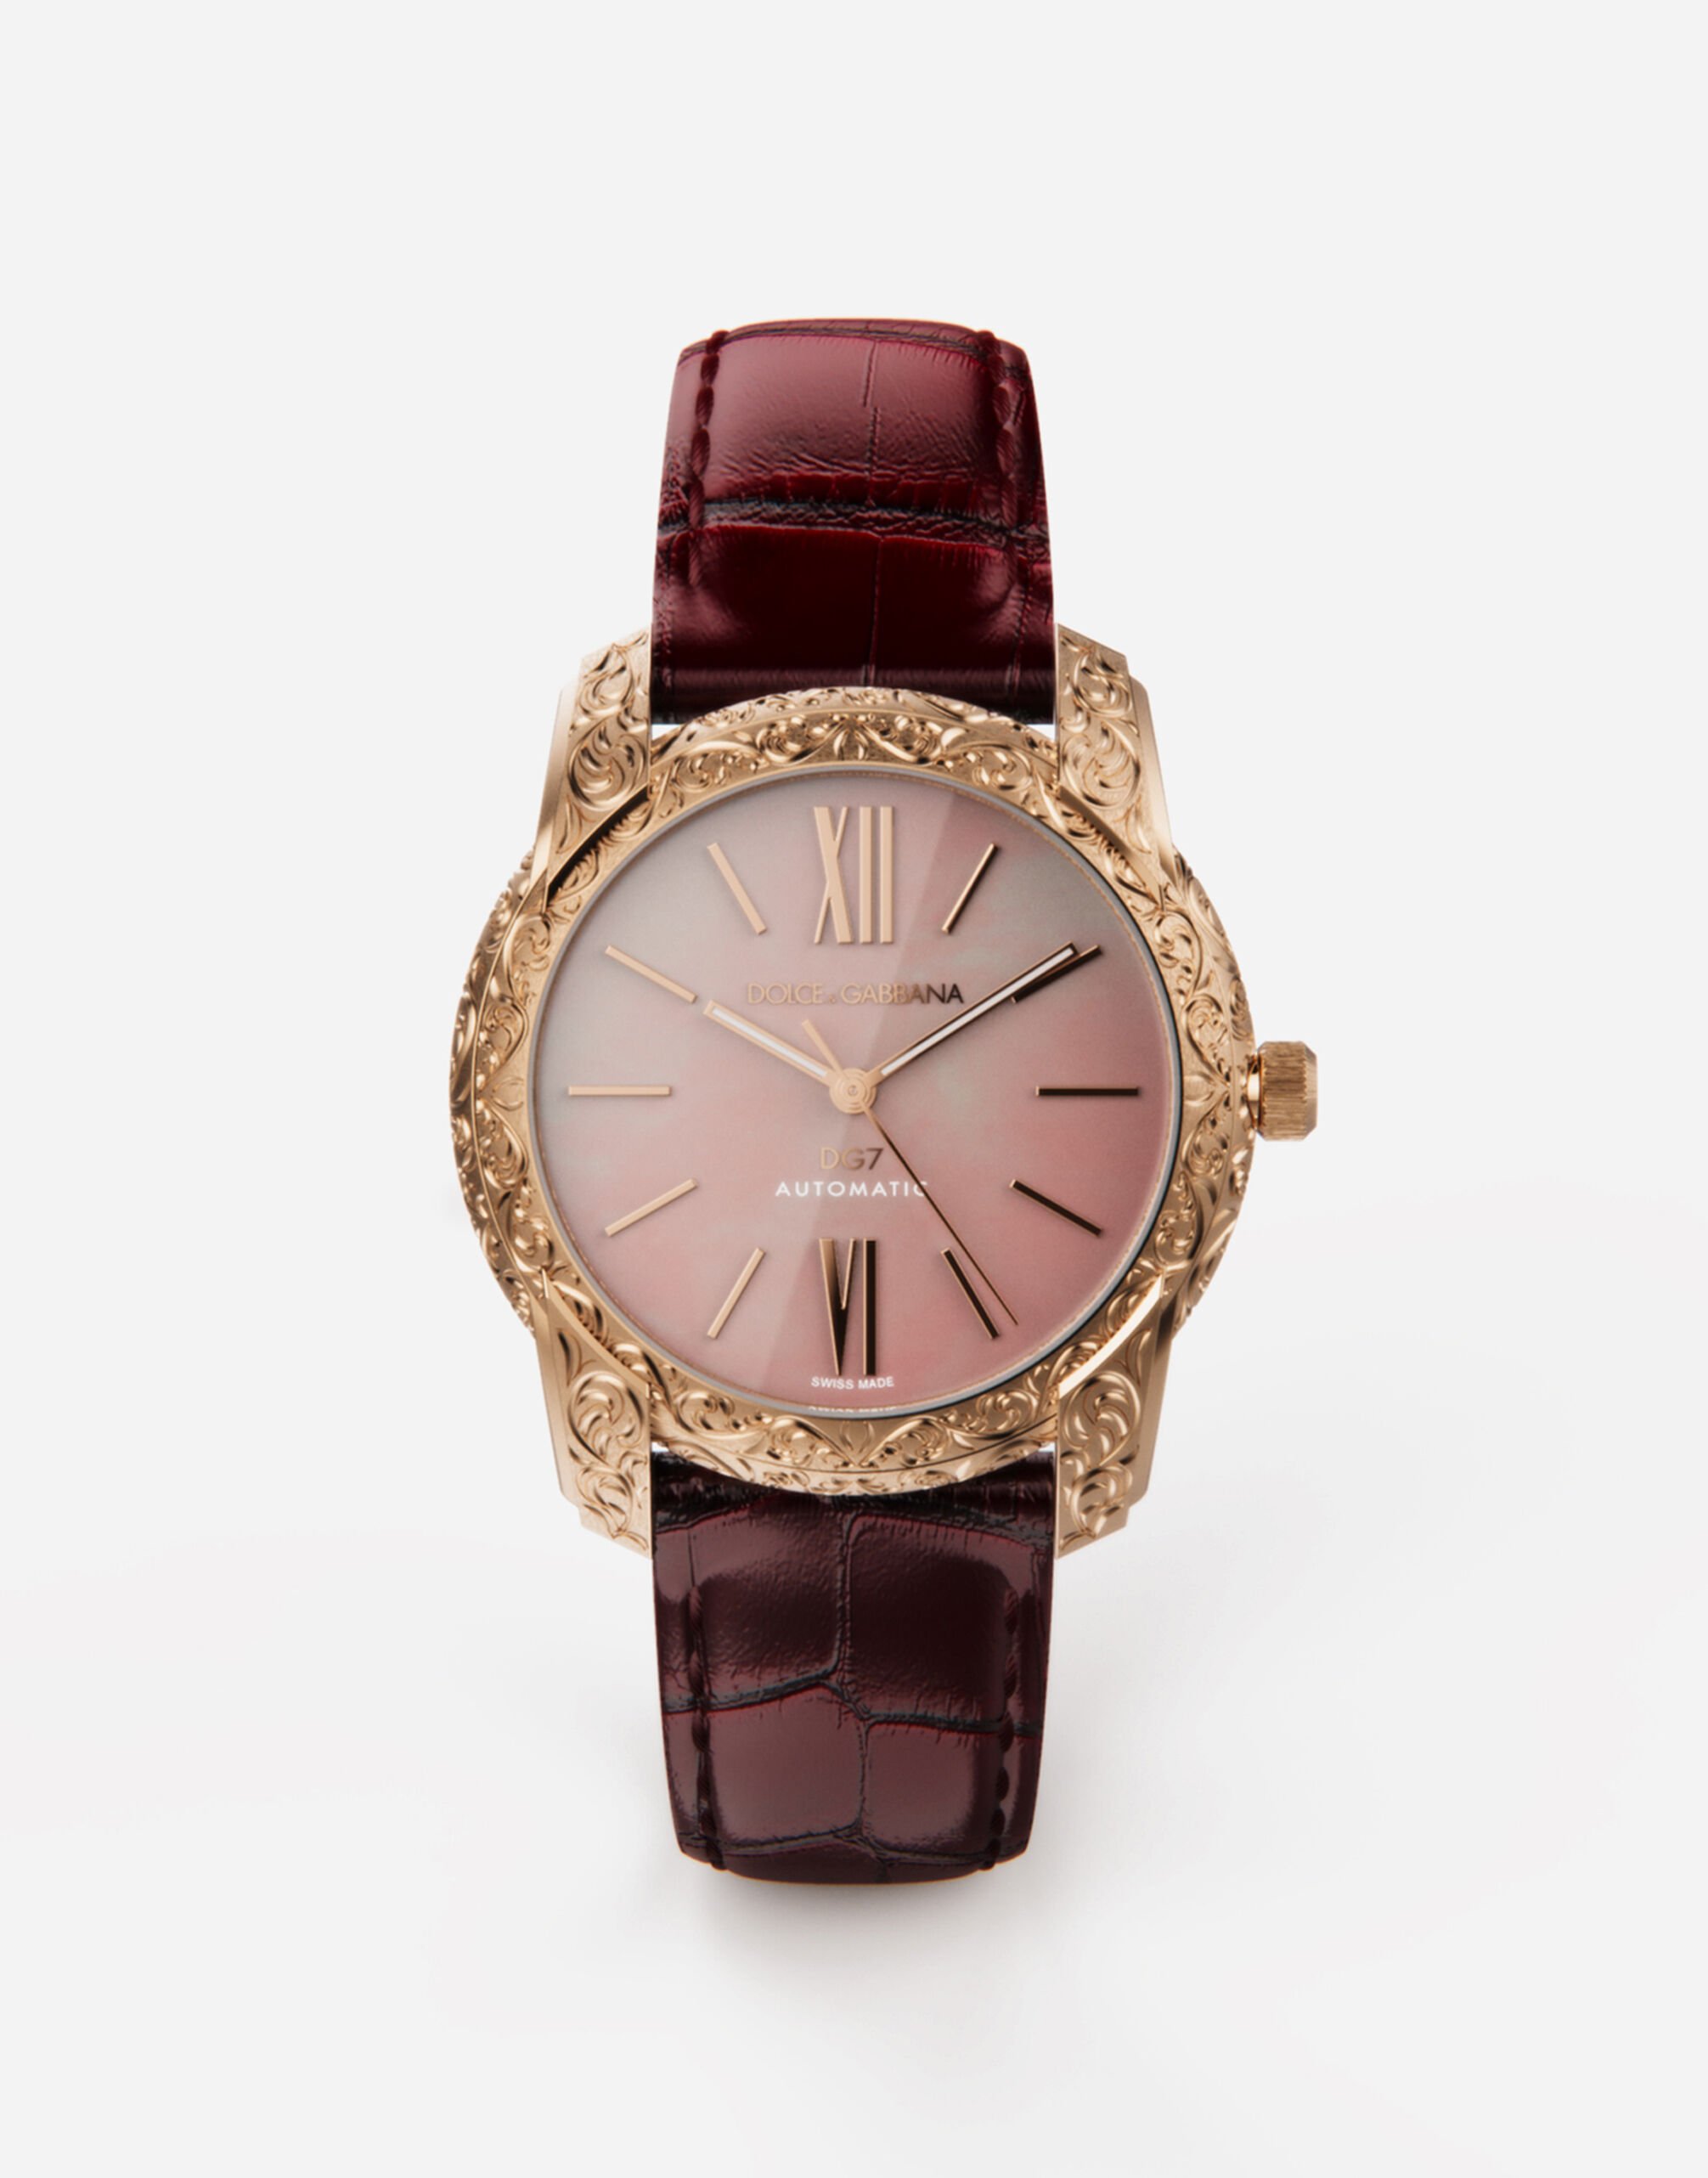 Dolce & Gabbana ساعة DG7 غاتوباردو من الذهب الأحمر مرصعة بعرق اللؤلؤ الوردي عنابي WWEEGGWW045